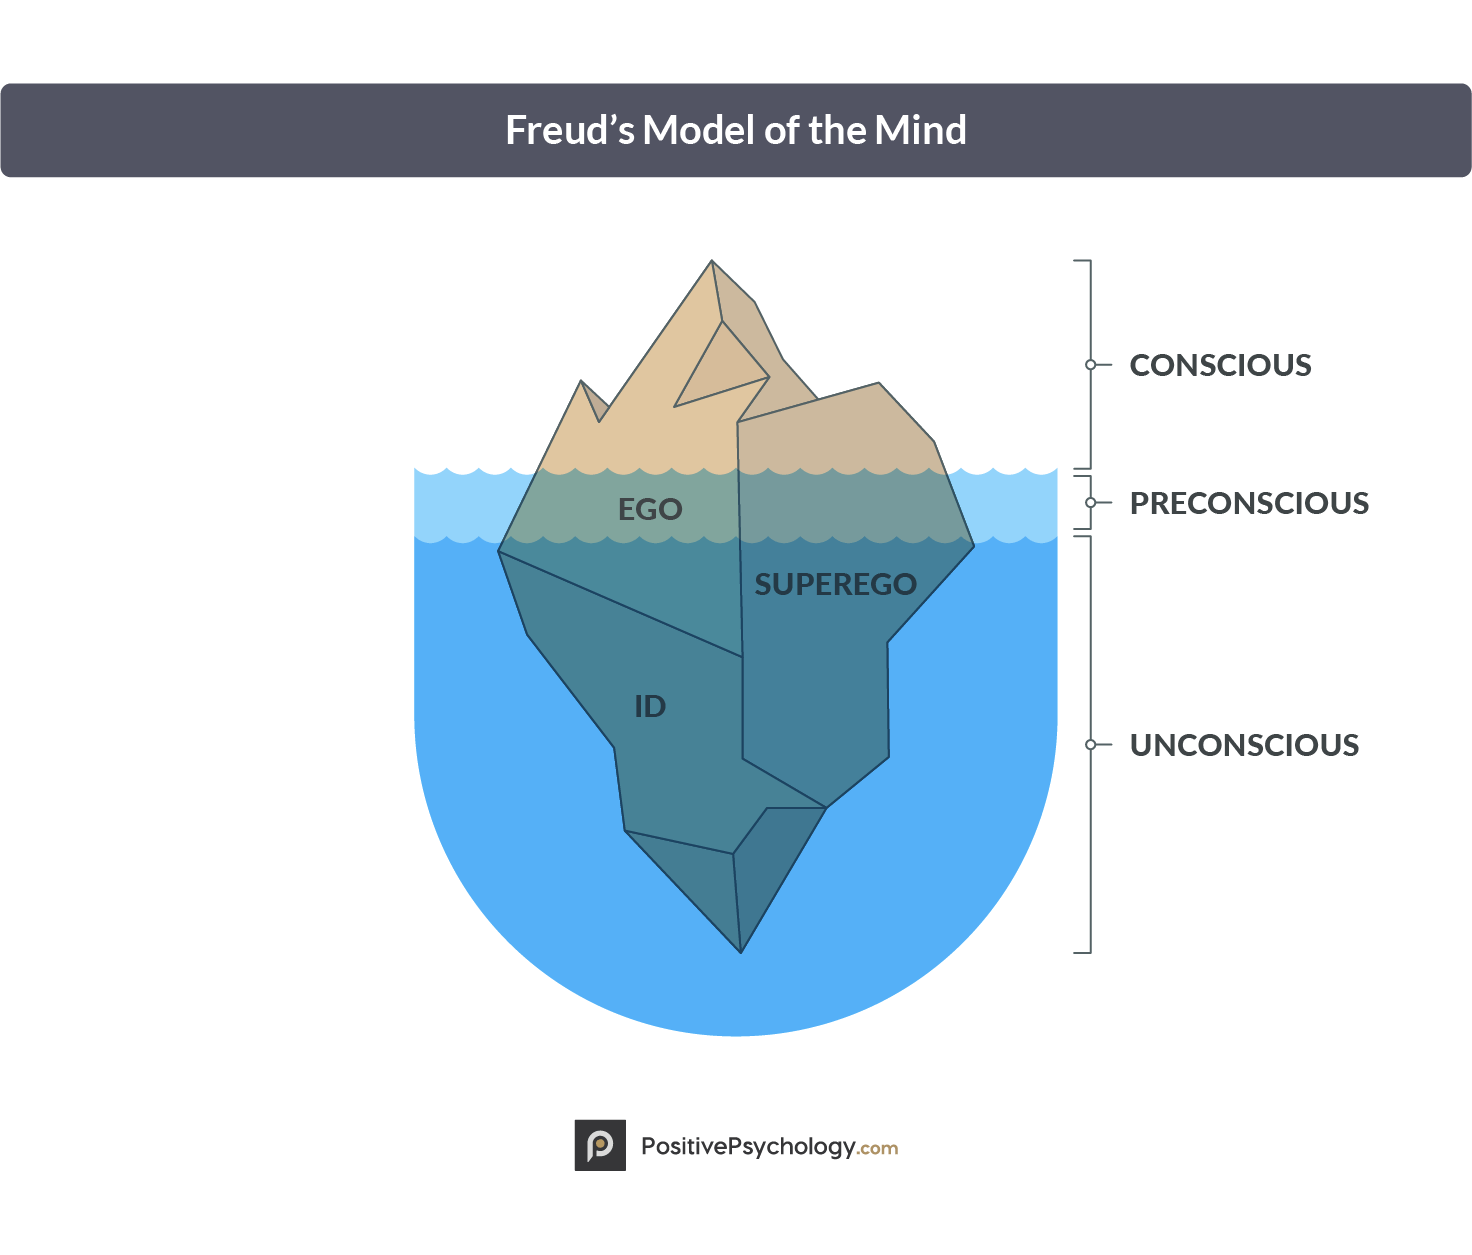 Freud’s Model of the Mind